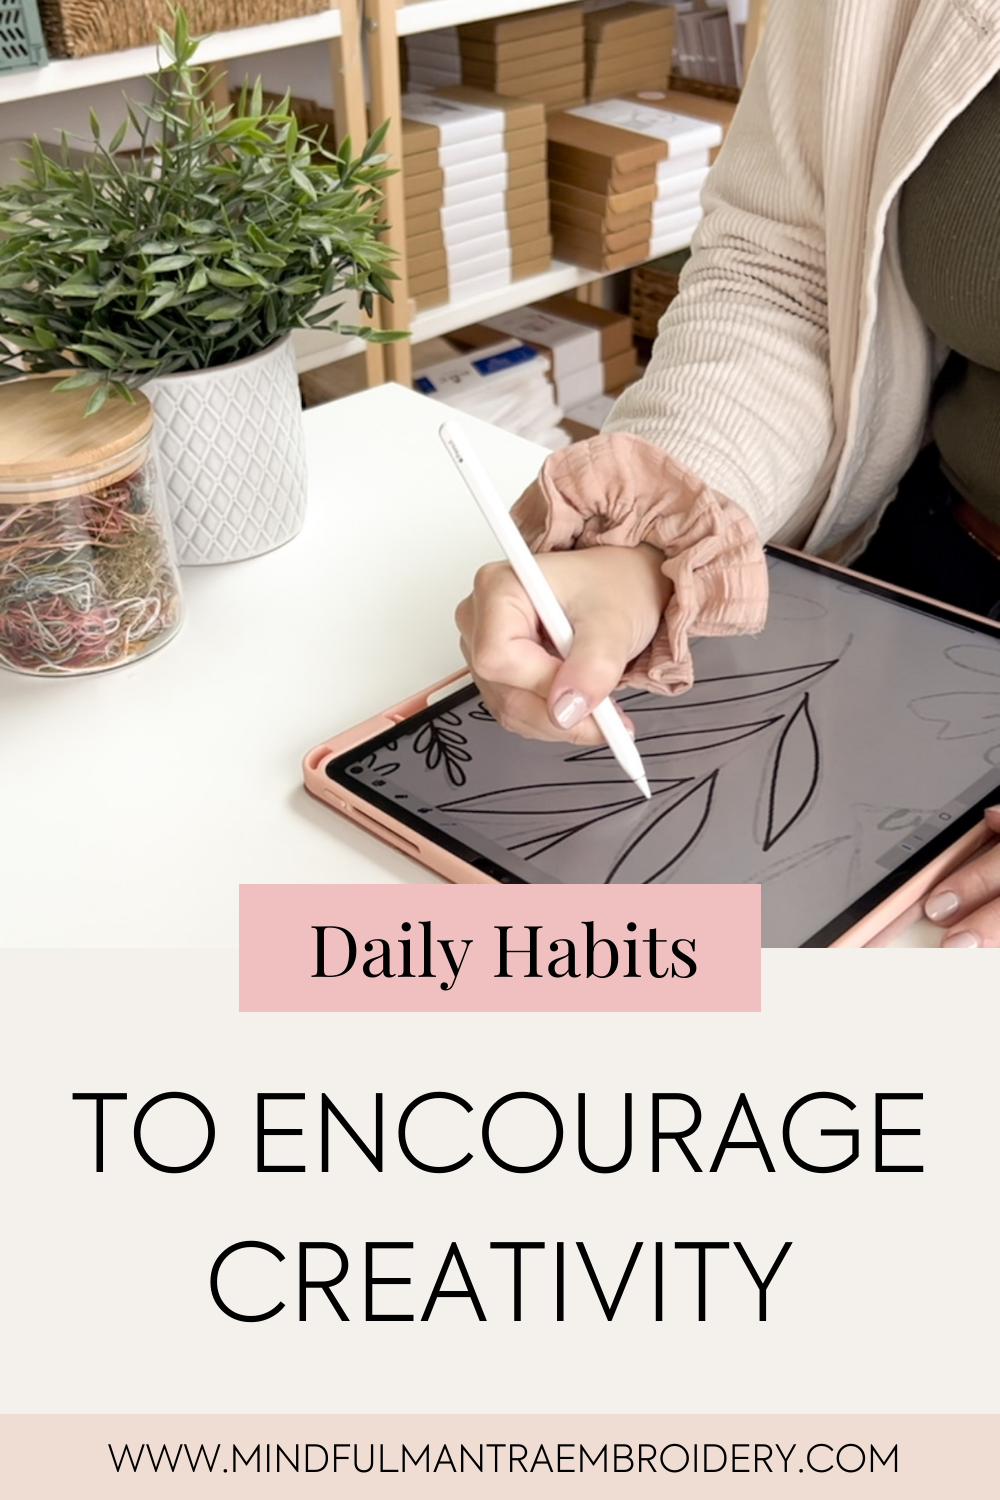 Daily Habits to Encourage Creativity